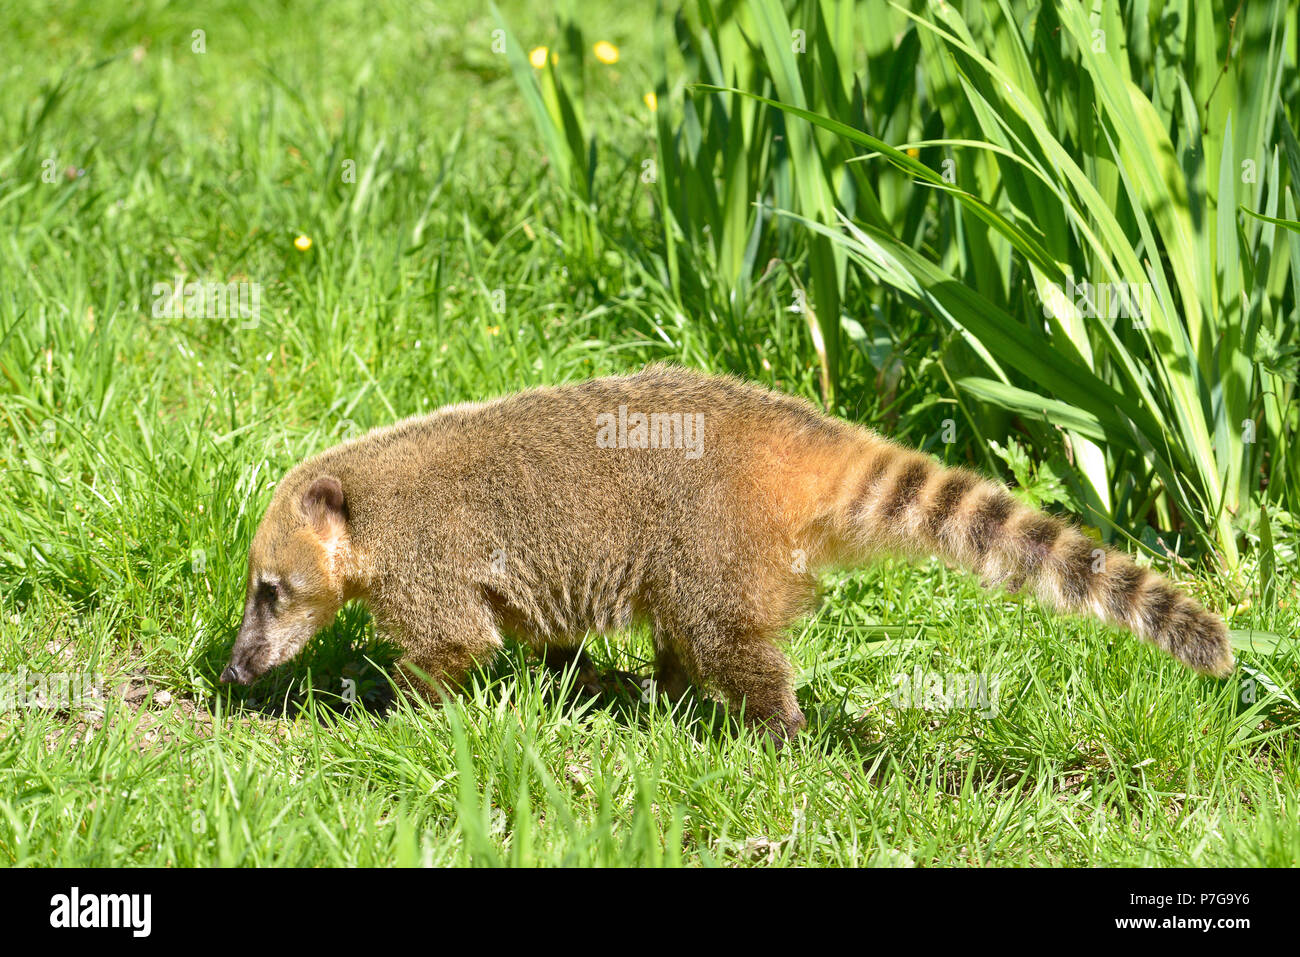 South American Coati, or Ring-tailed Coati (Nasua nasua) seen from profile on grass Stock Photo